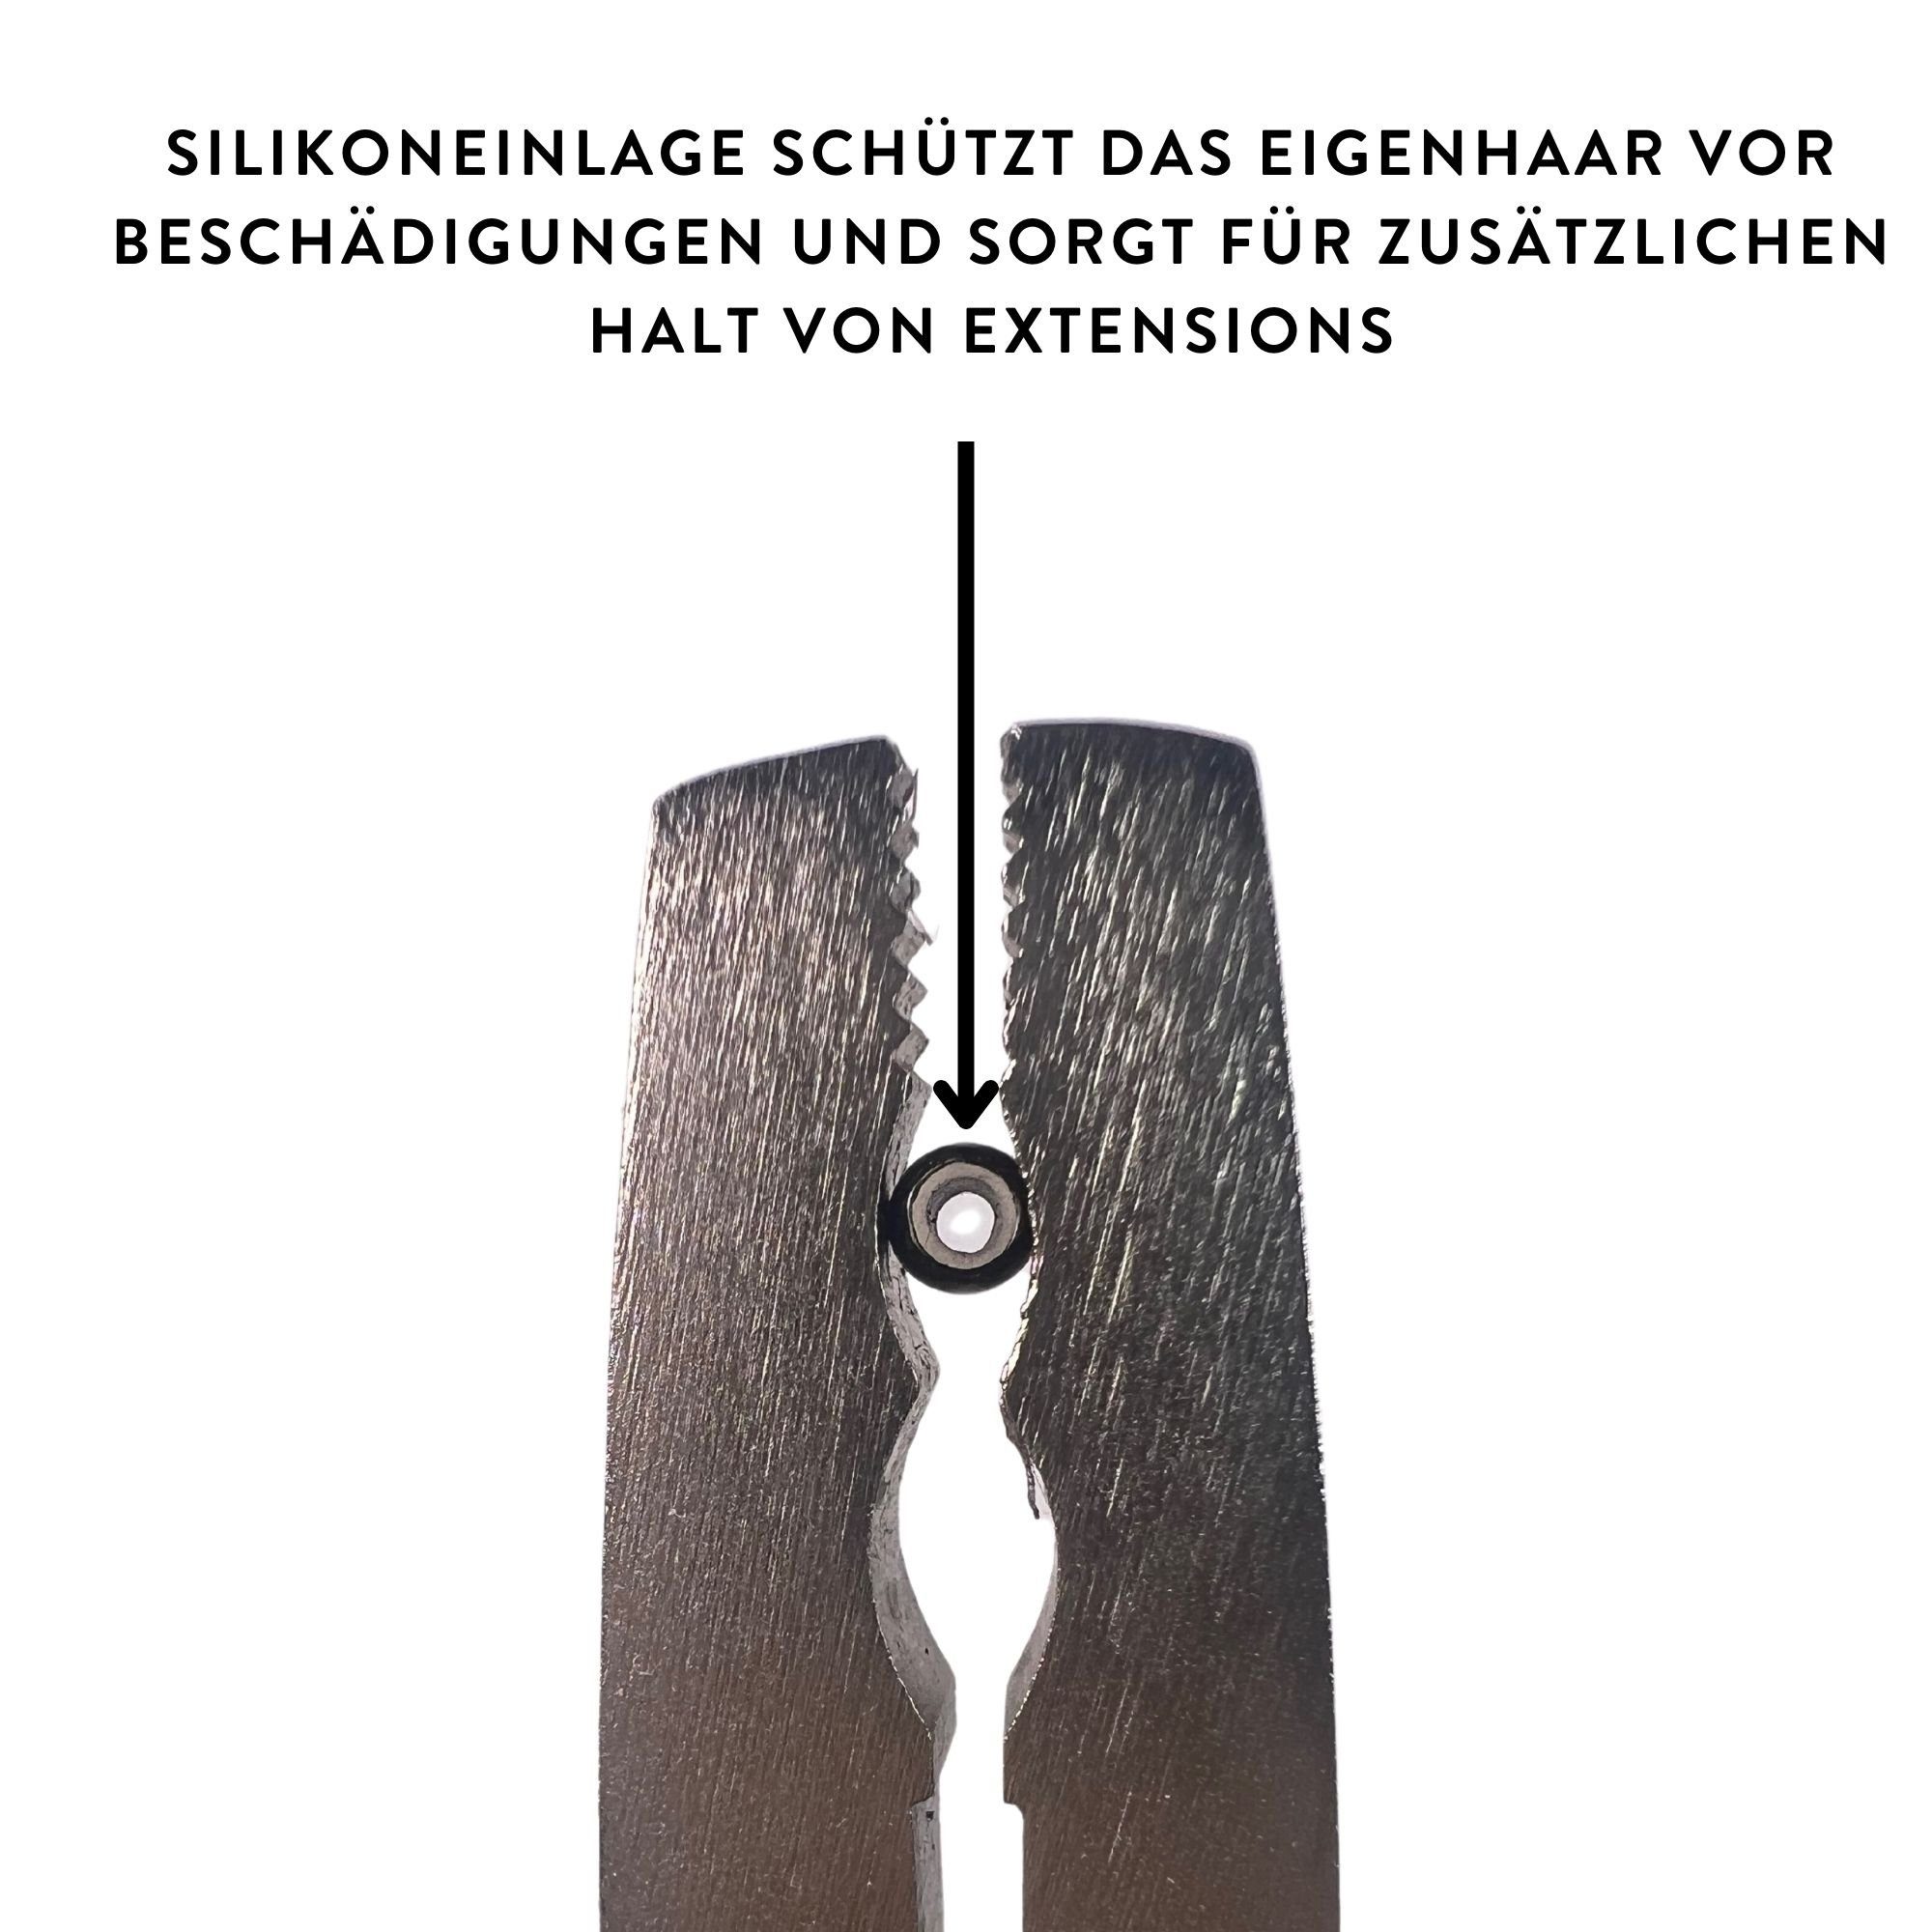 hair2heart Echthaar-Extension mit Silikoneinlage #5 Nanorings